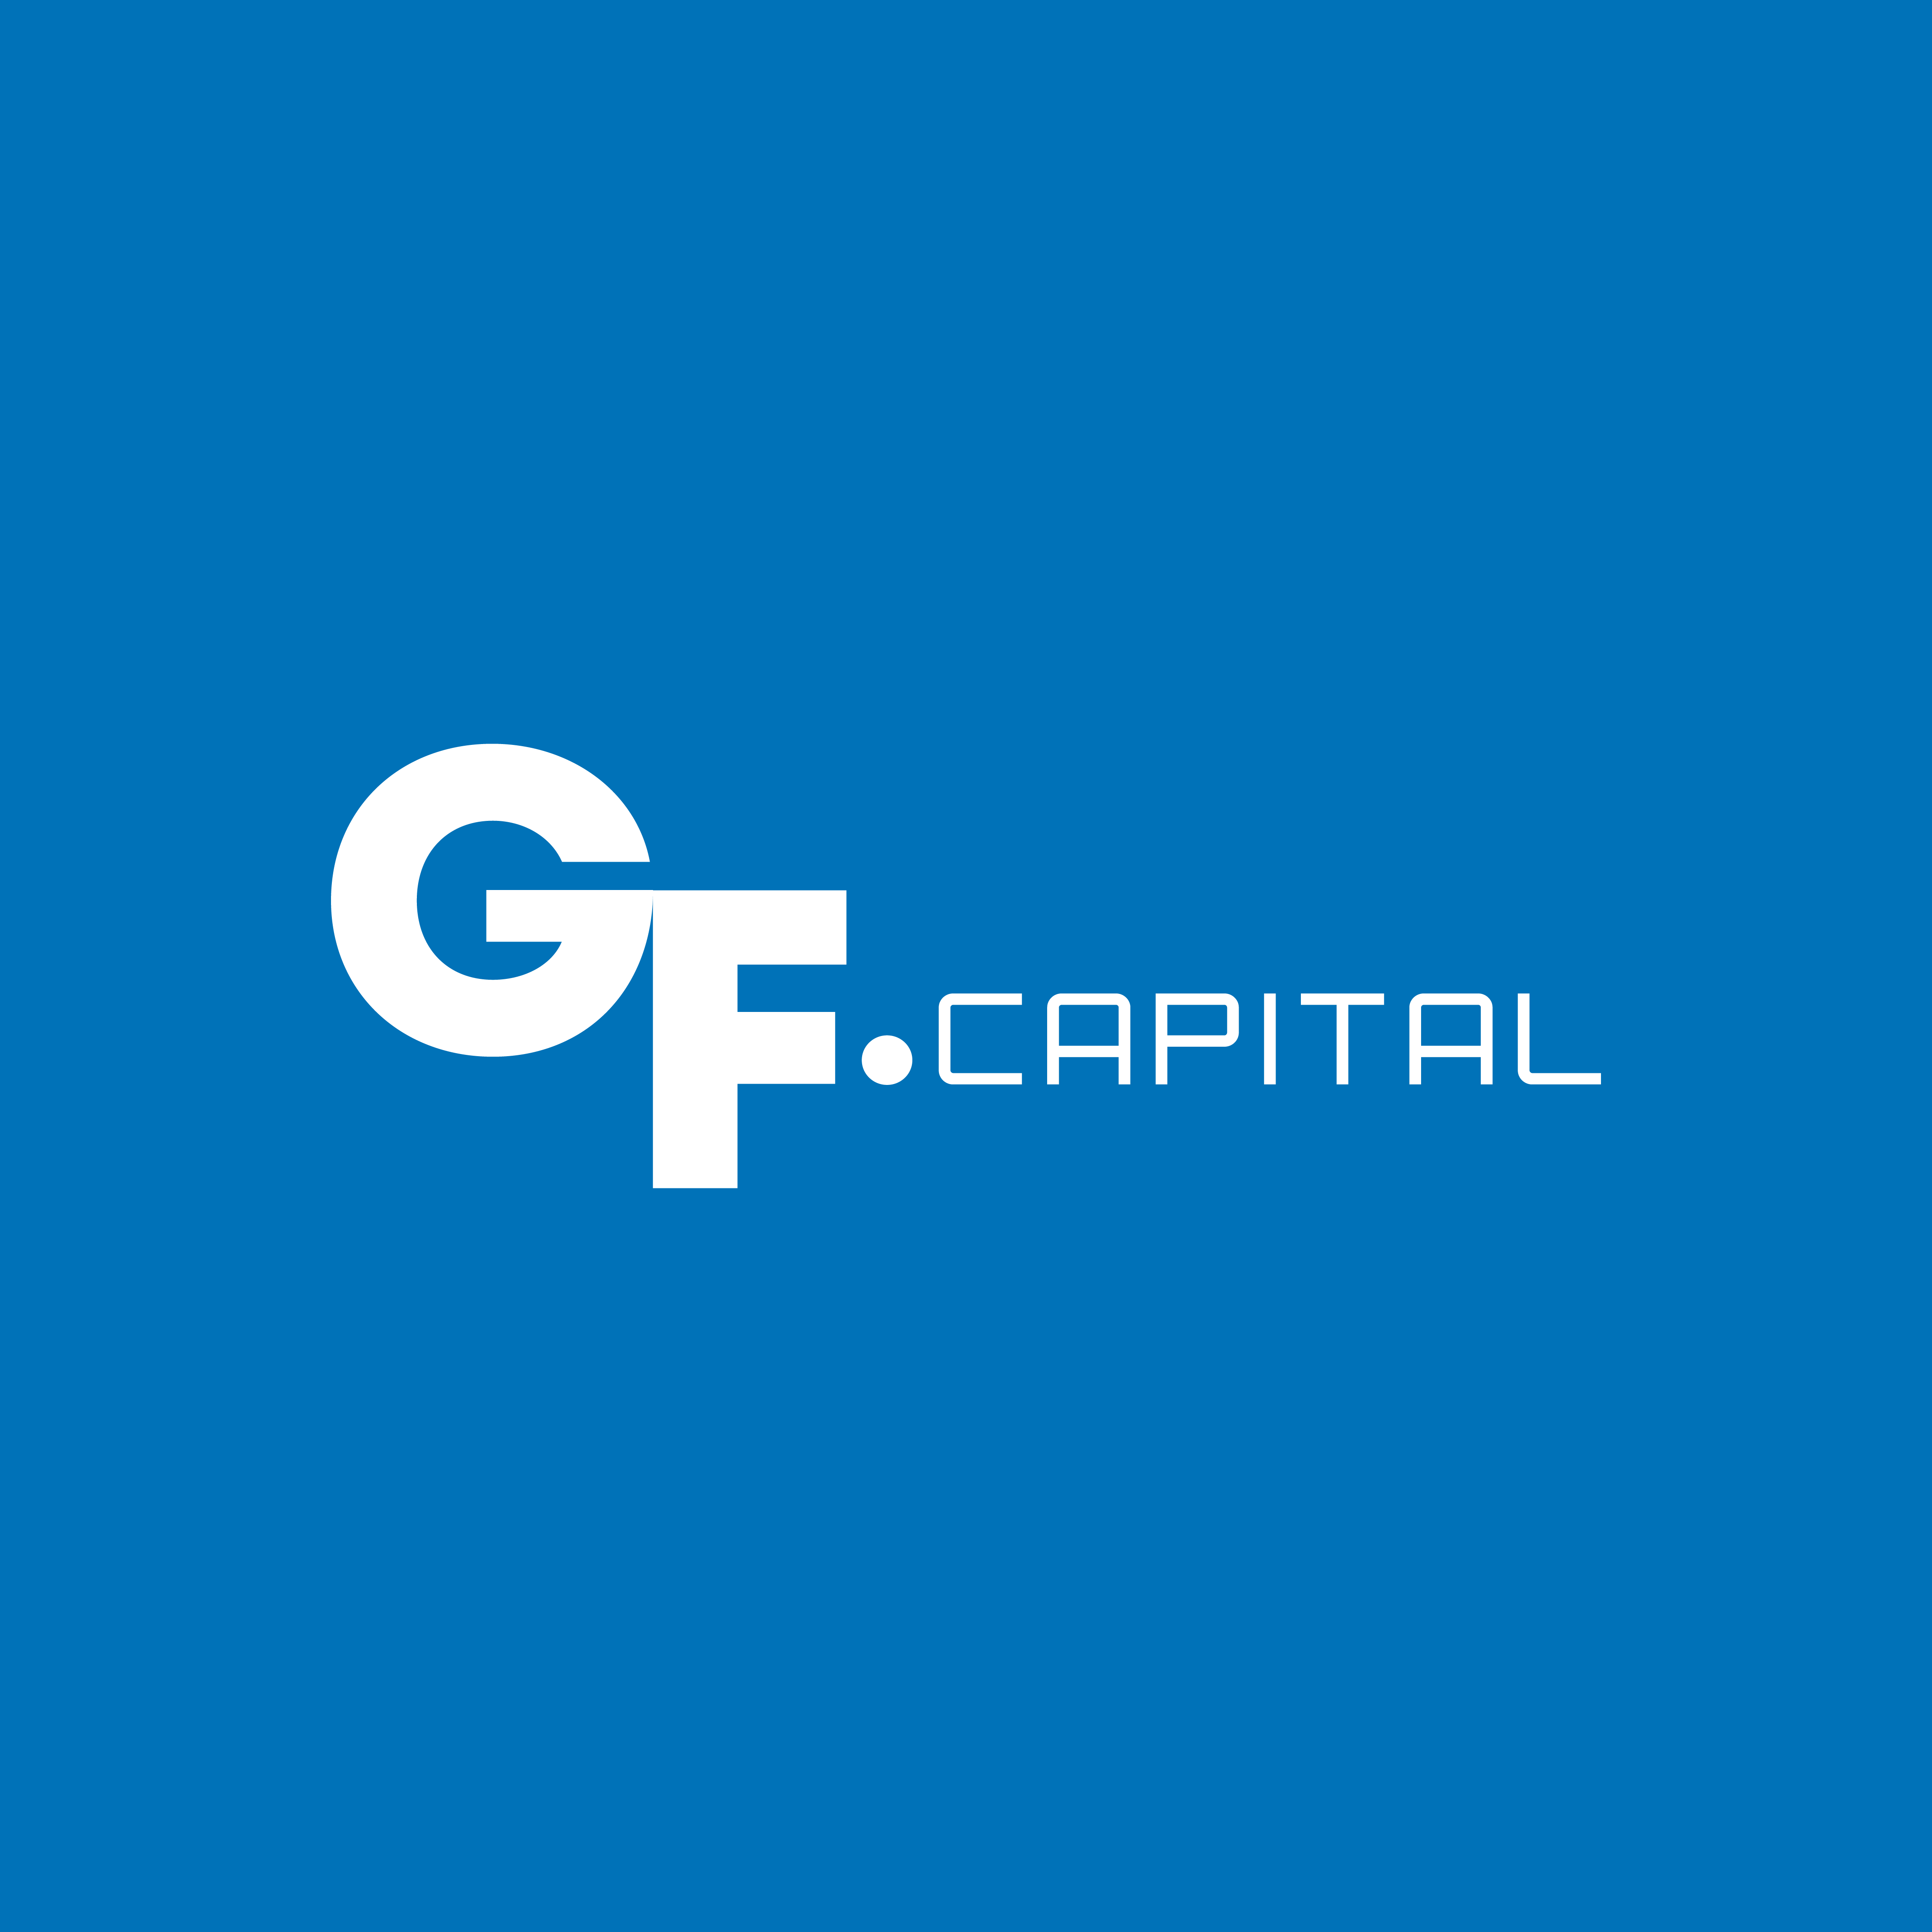 GF.Capital